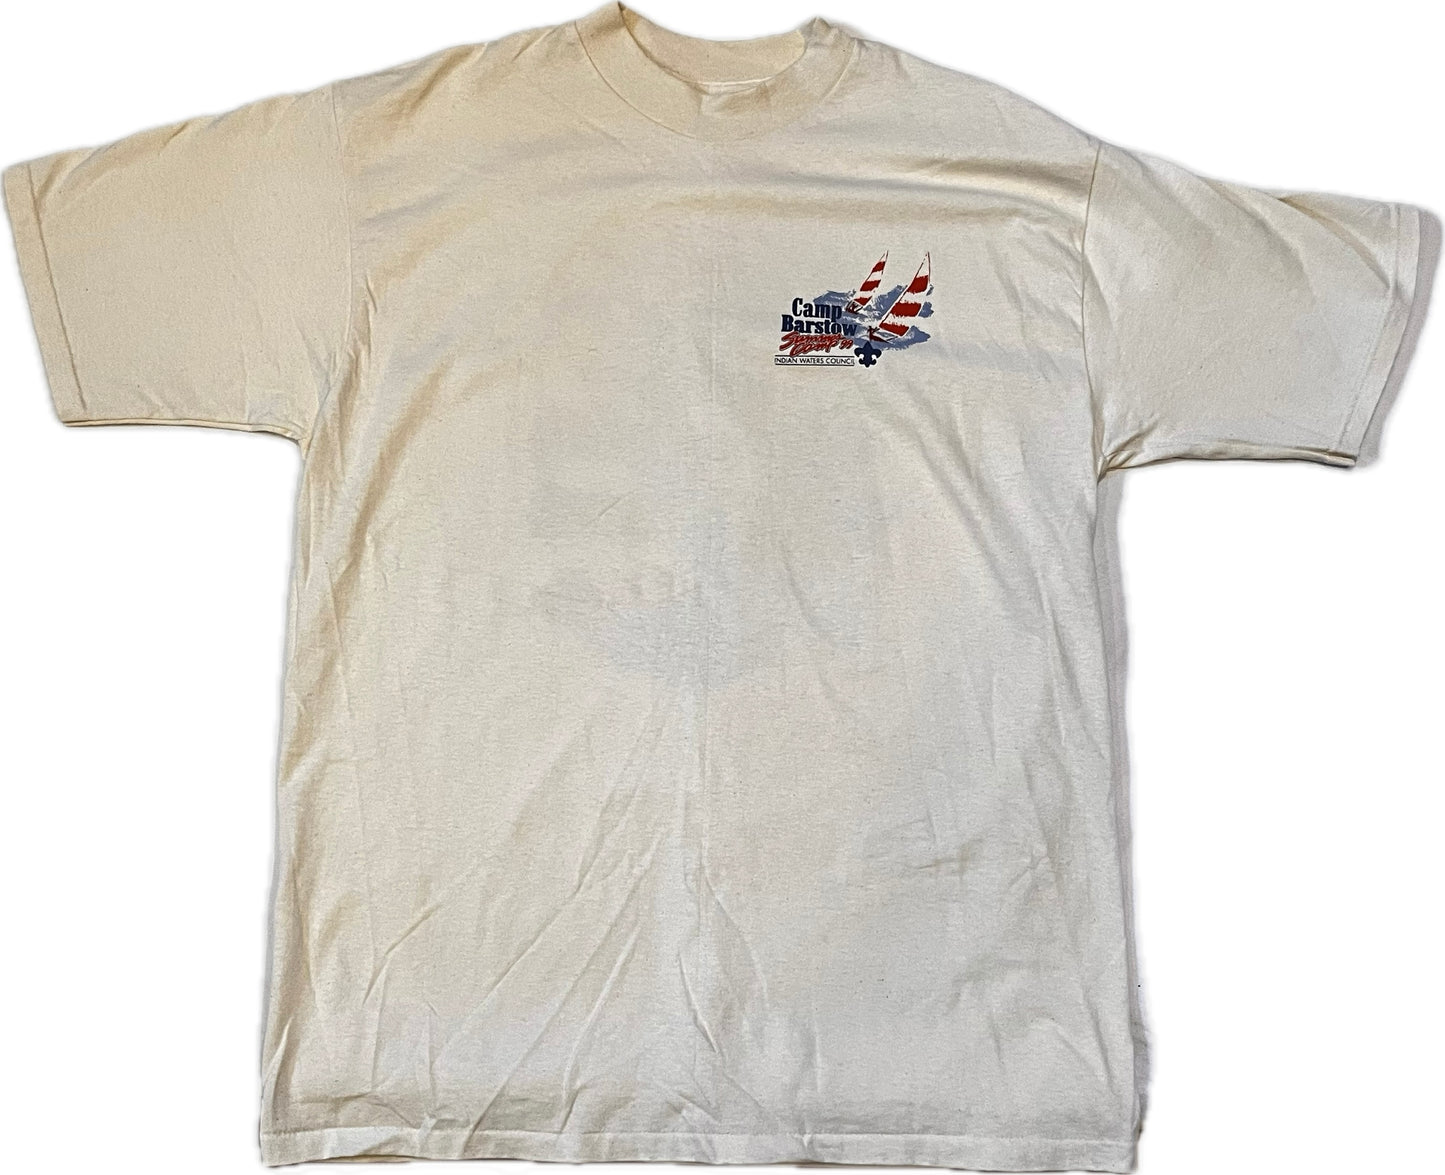 90s Camp Barstow Sailing T shirt